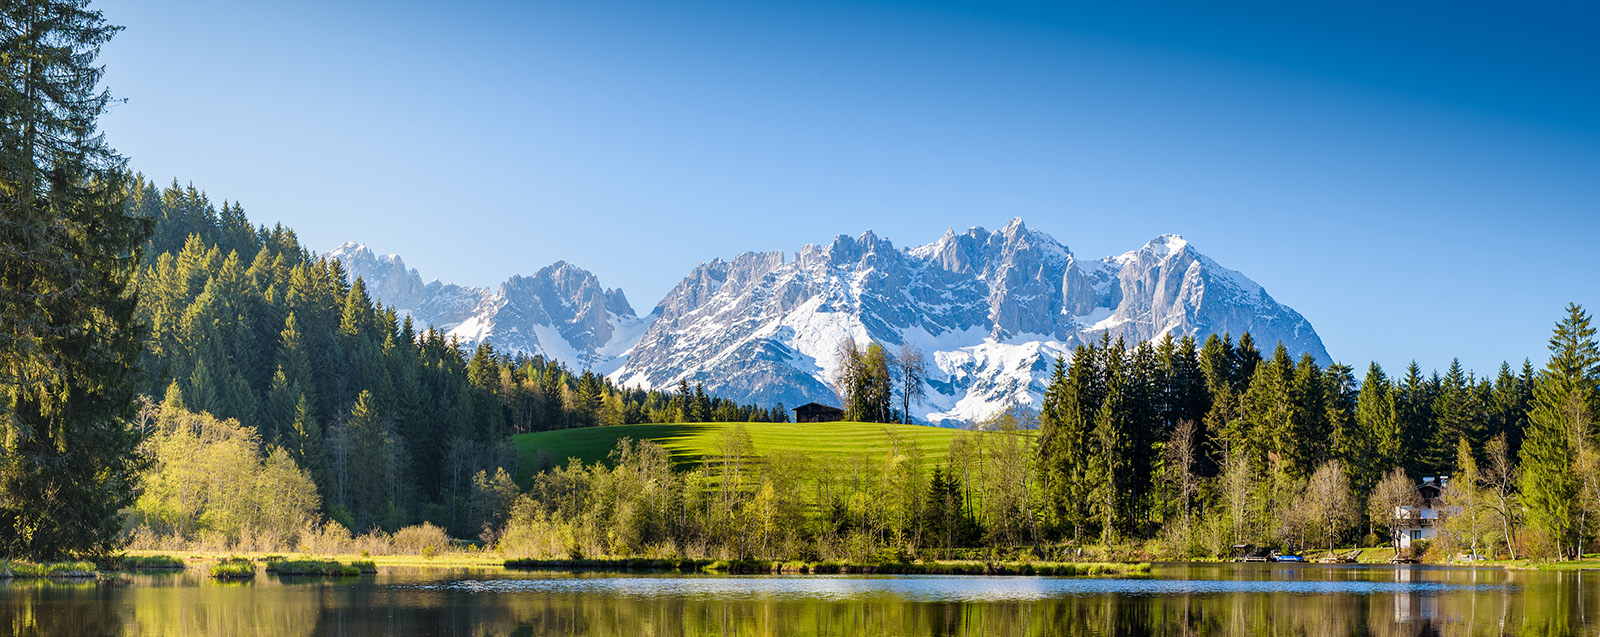 Idyllic alpine scenery, snowy mountains mirroring in a small lake.